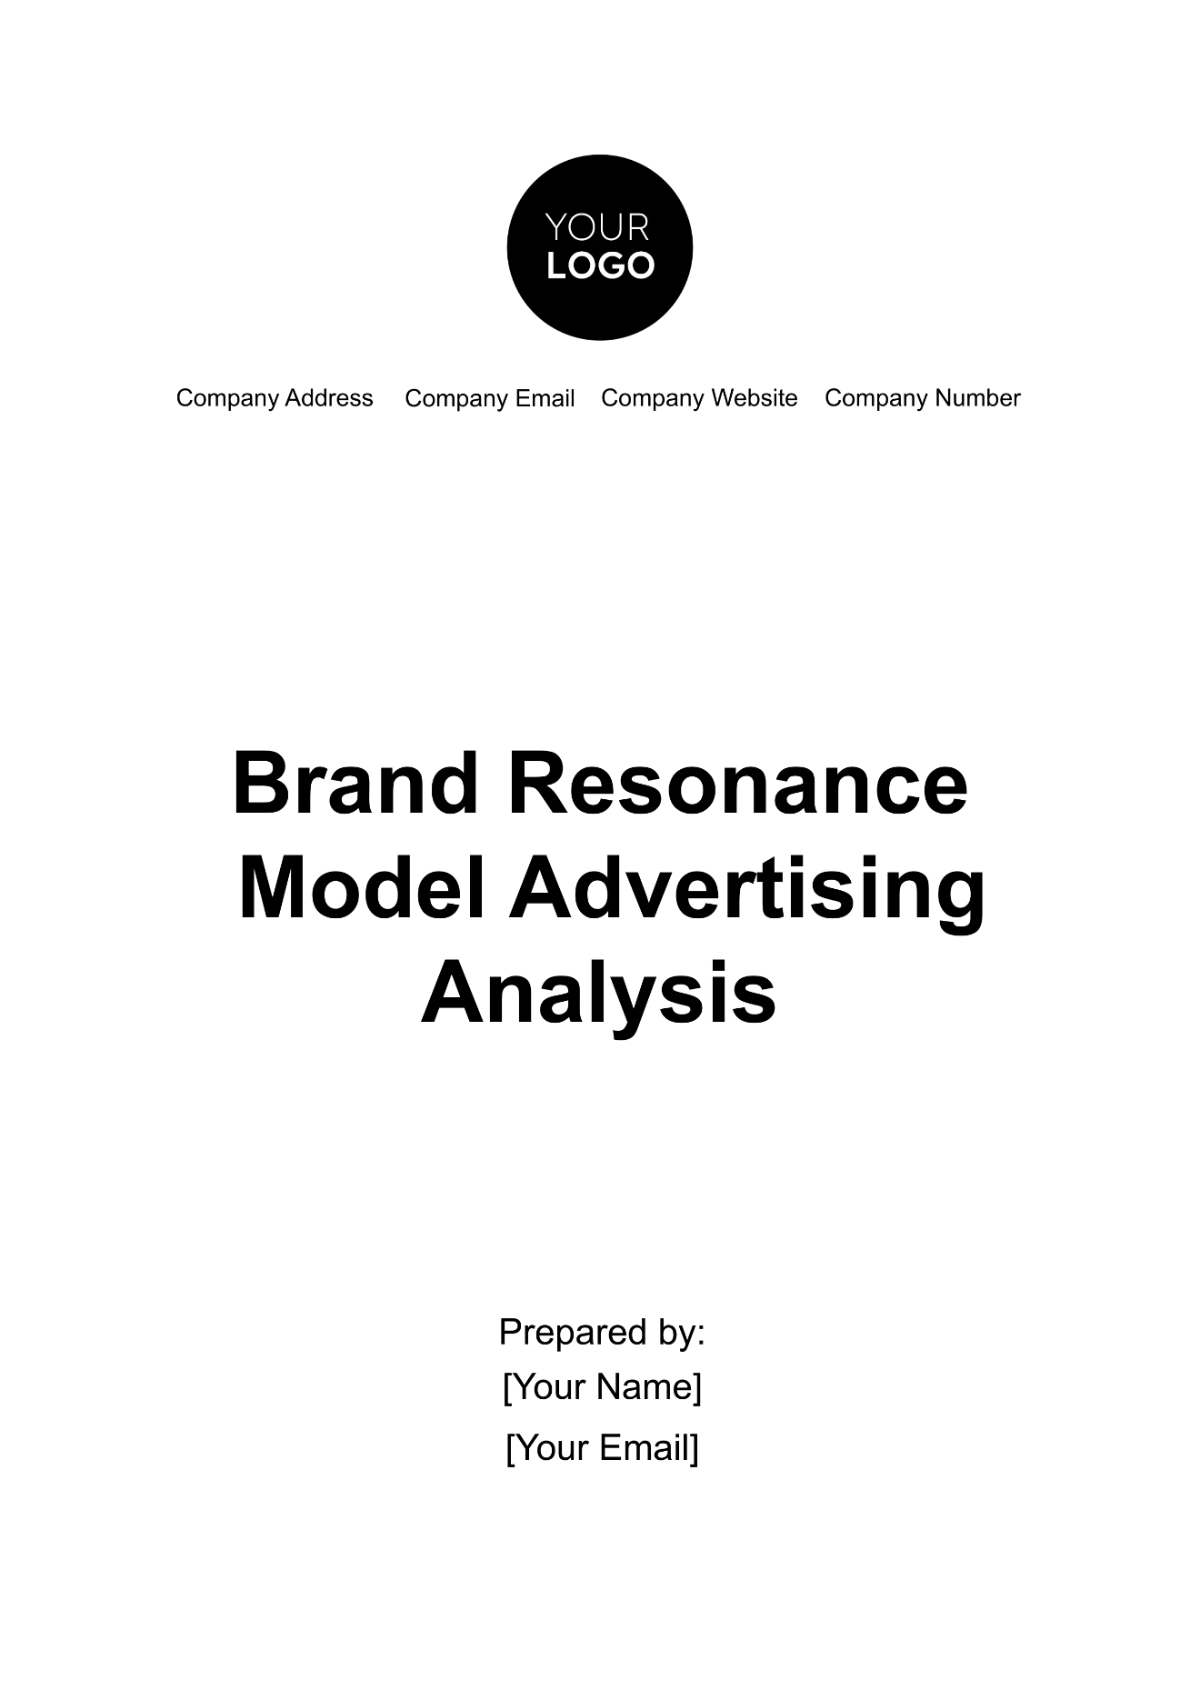 Brand Resonance Model Advertising Analysis Template